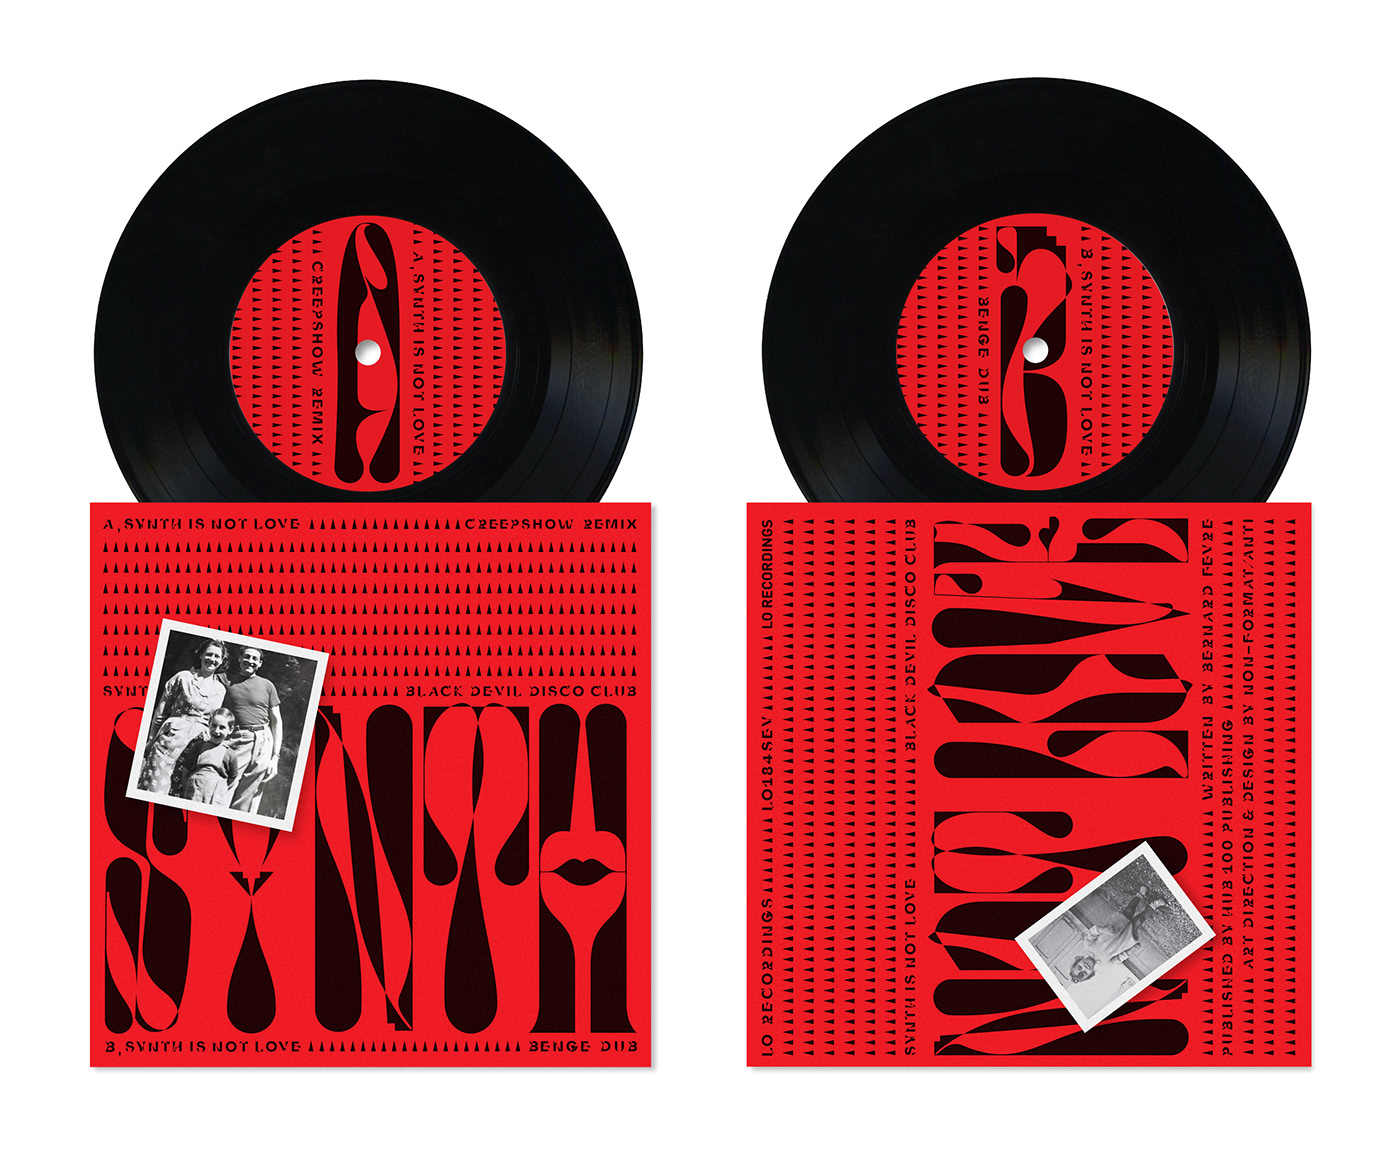 a flower anti black devil Disco club gatefold LP lo recordings Lucifer Is Music Packaging non-format red vinyl